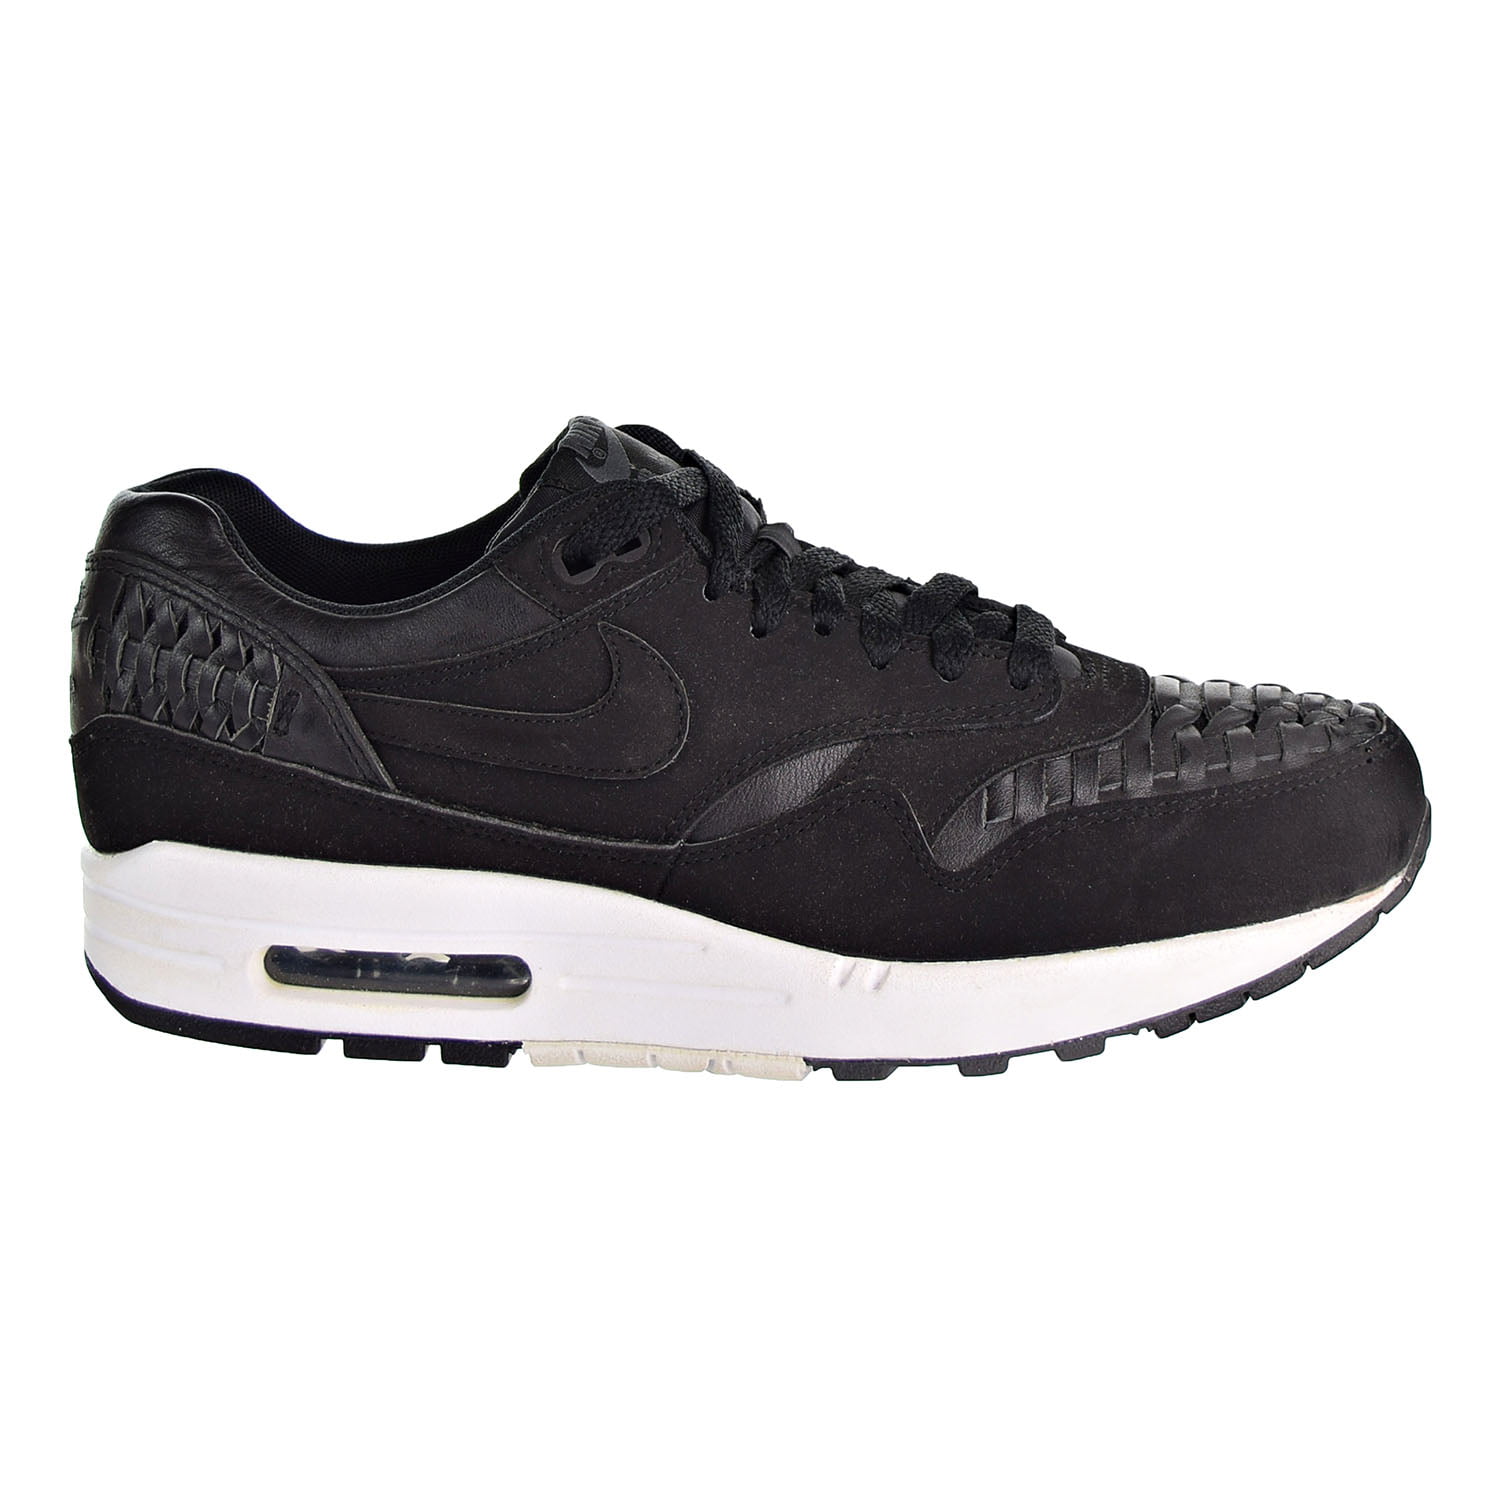 Nike Air Max 1 Men's Shoes Black-Black-Dark Grey 725232-001 Walmart.com